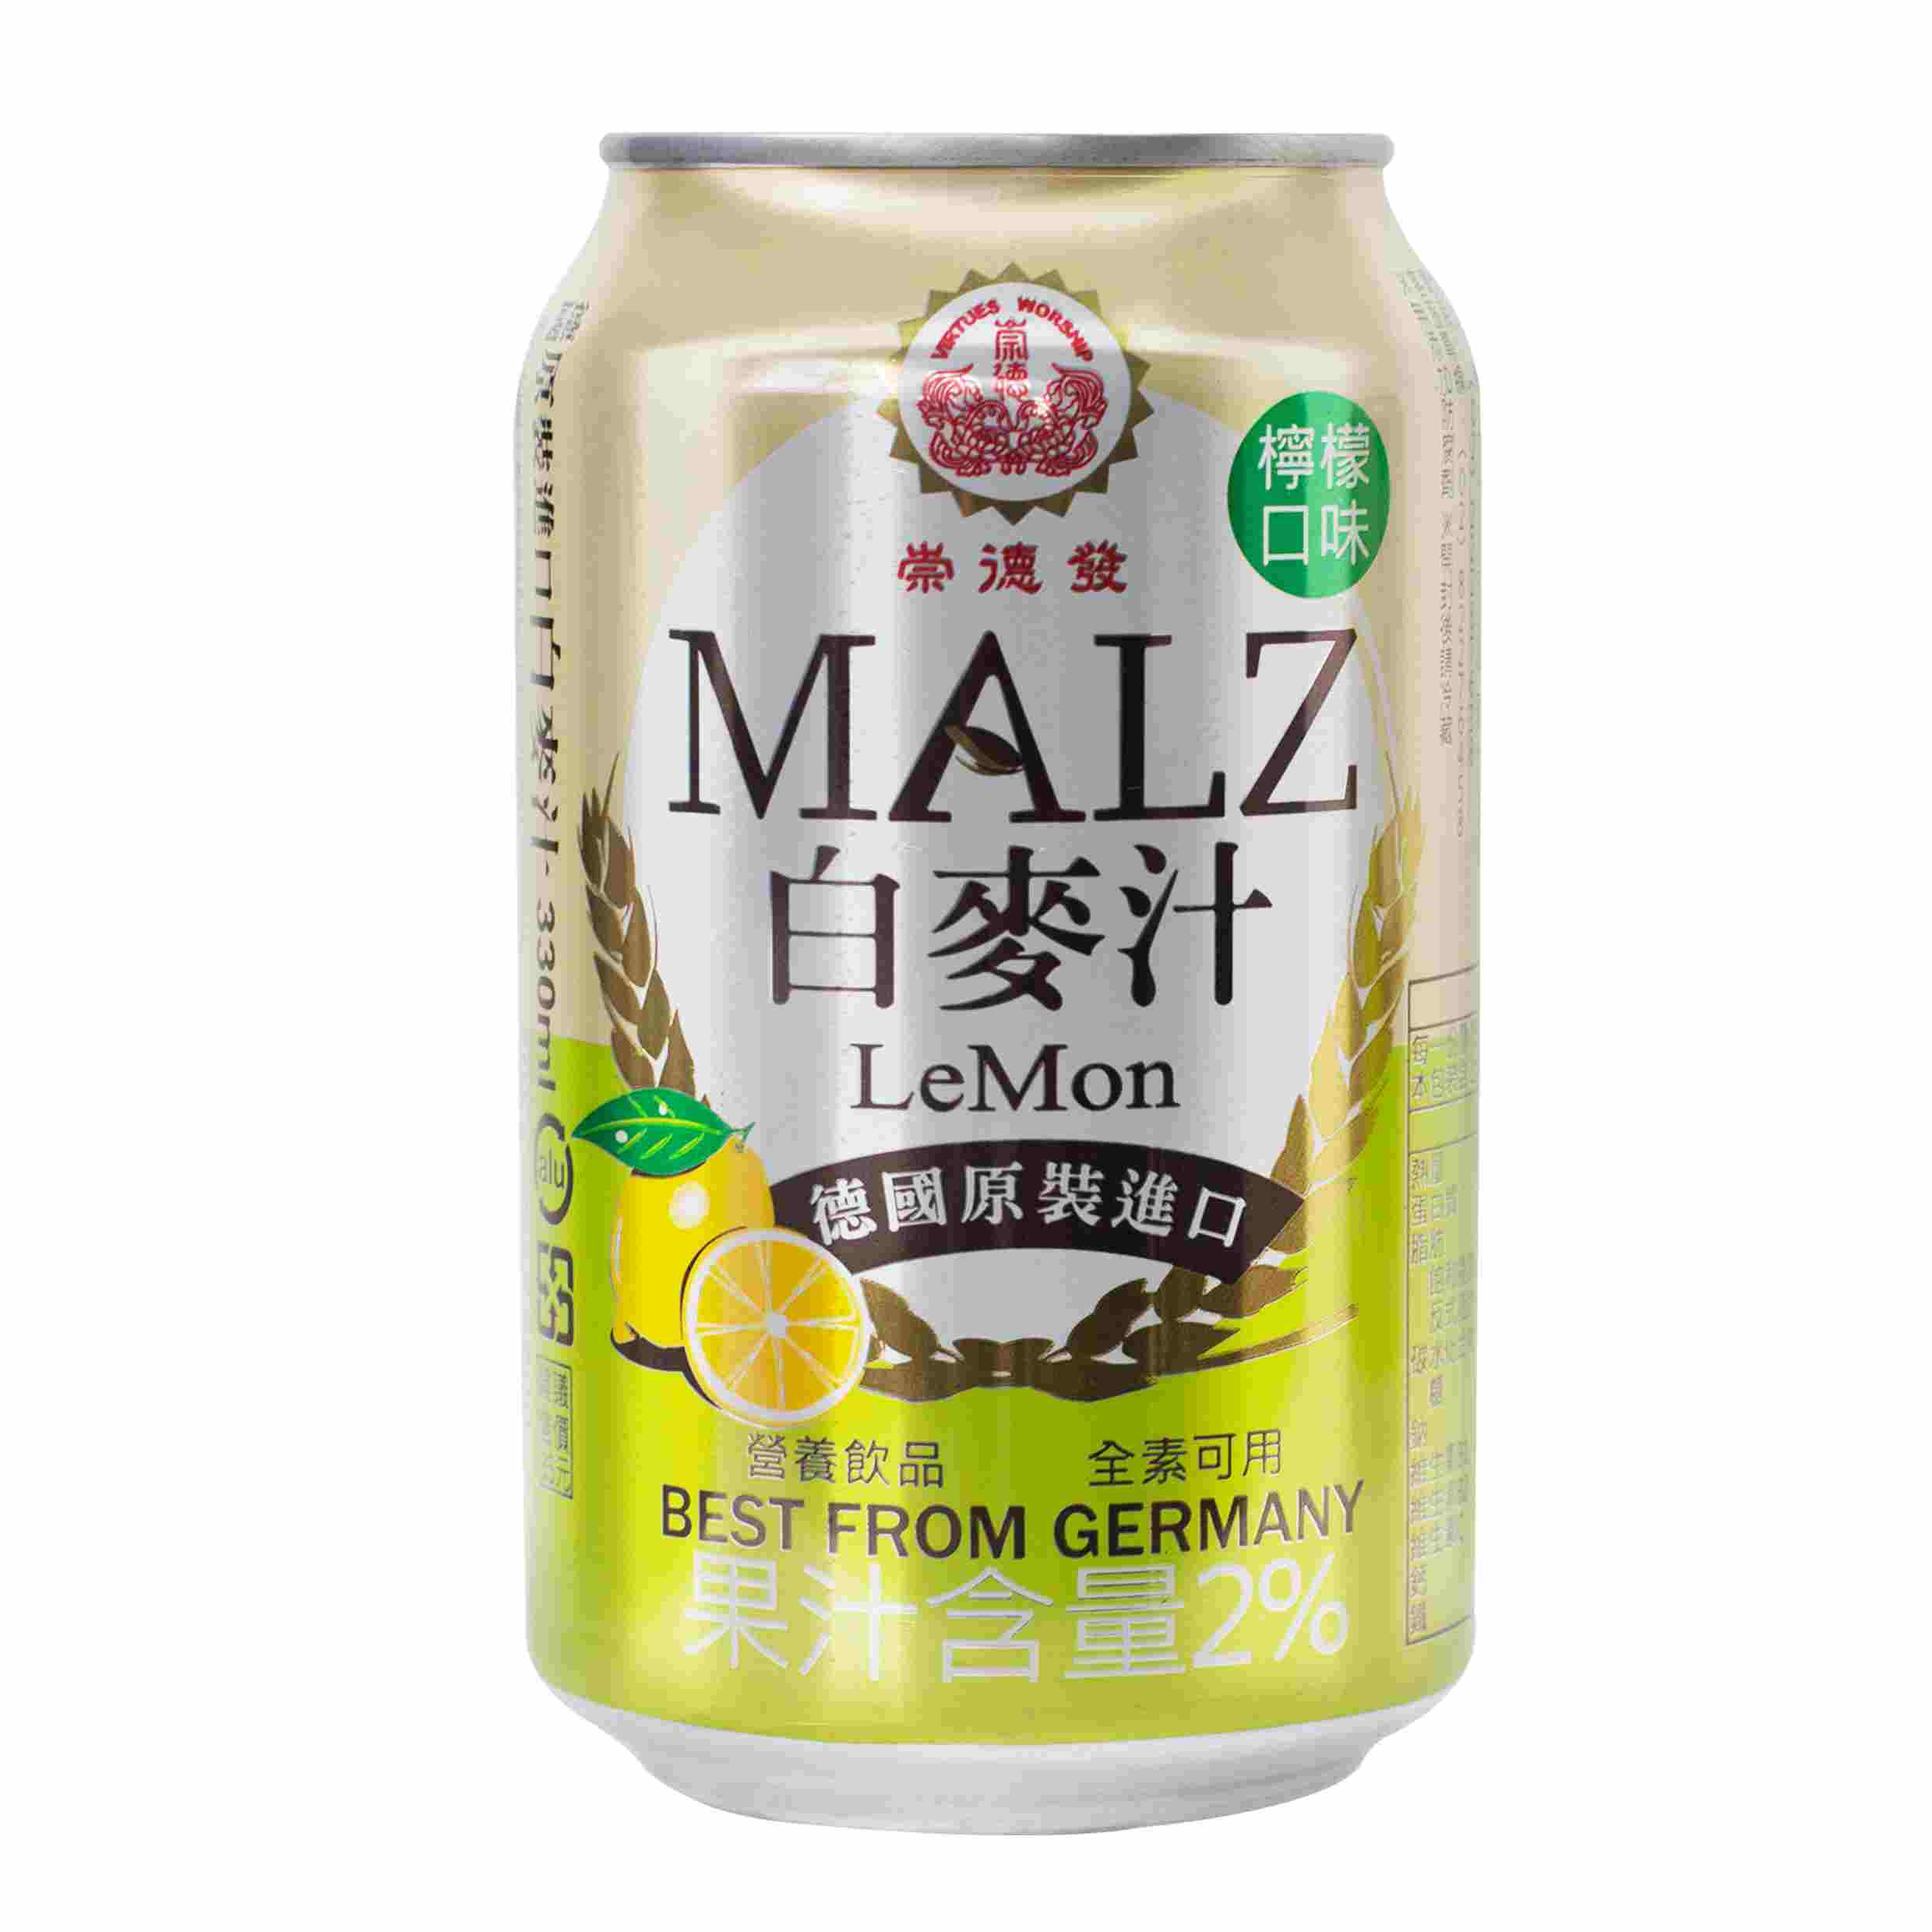 Image Lemon MALZ 崇德发柠檬白麦汁(铁罐) 330ml